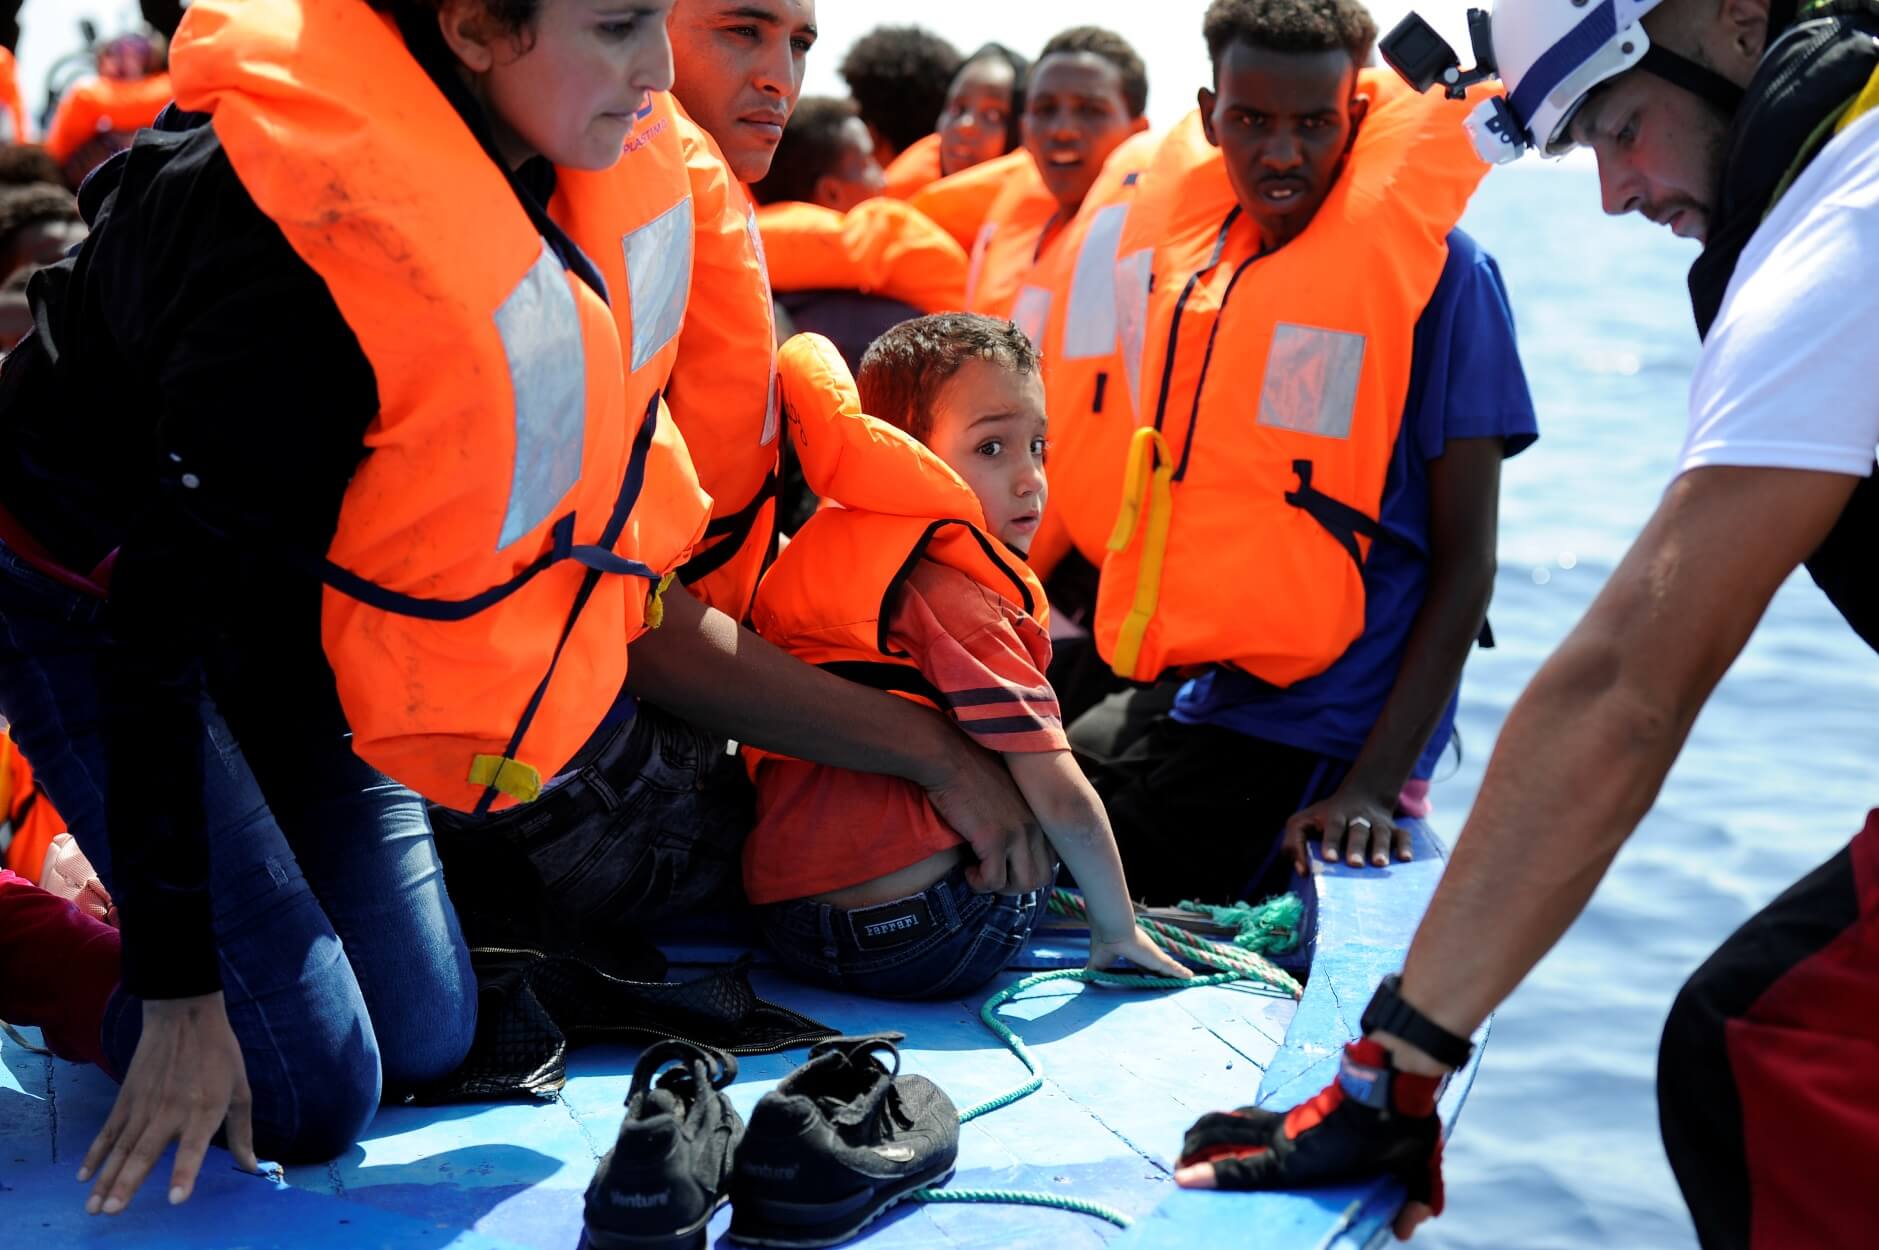 Iατροδικαστής ταυτοποιεί χιλιάδες ανώνυμες σορούς από μετανάστες που χάθηκαν στα νερά της Μεσογείου!